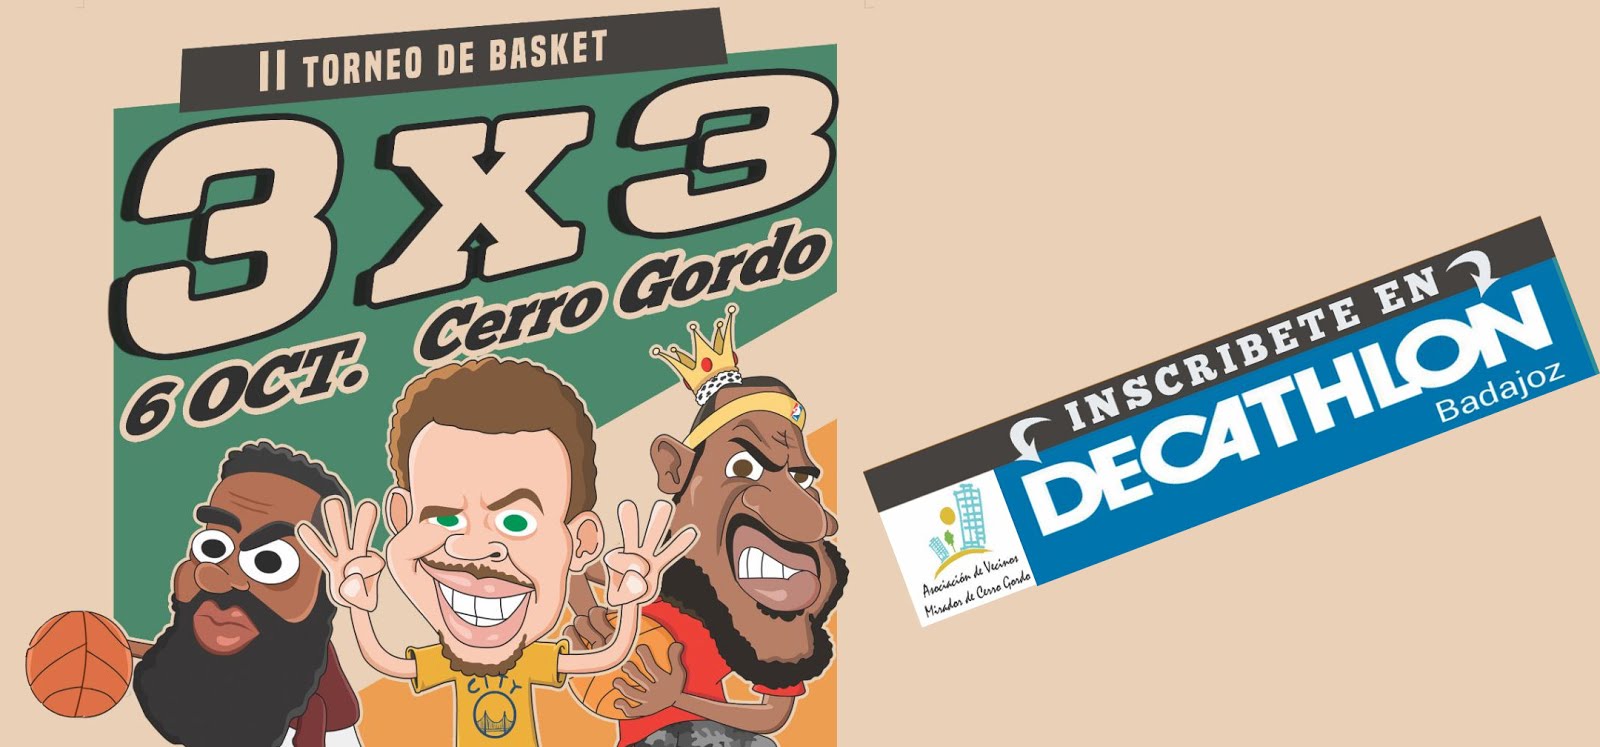 2º Torneo Basket 3x3 Cerro Gordo